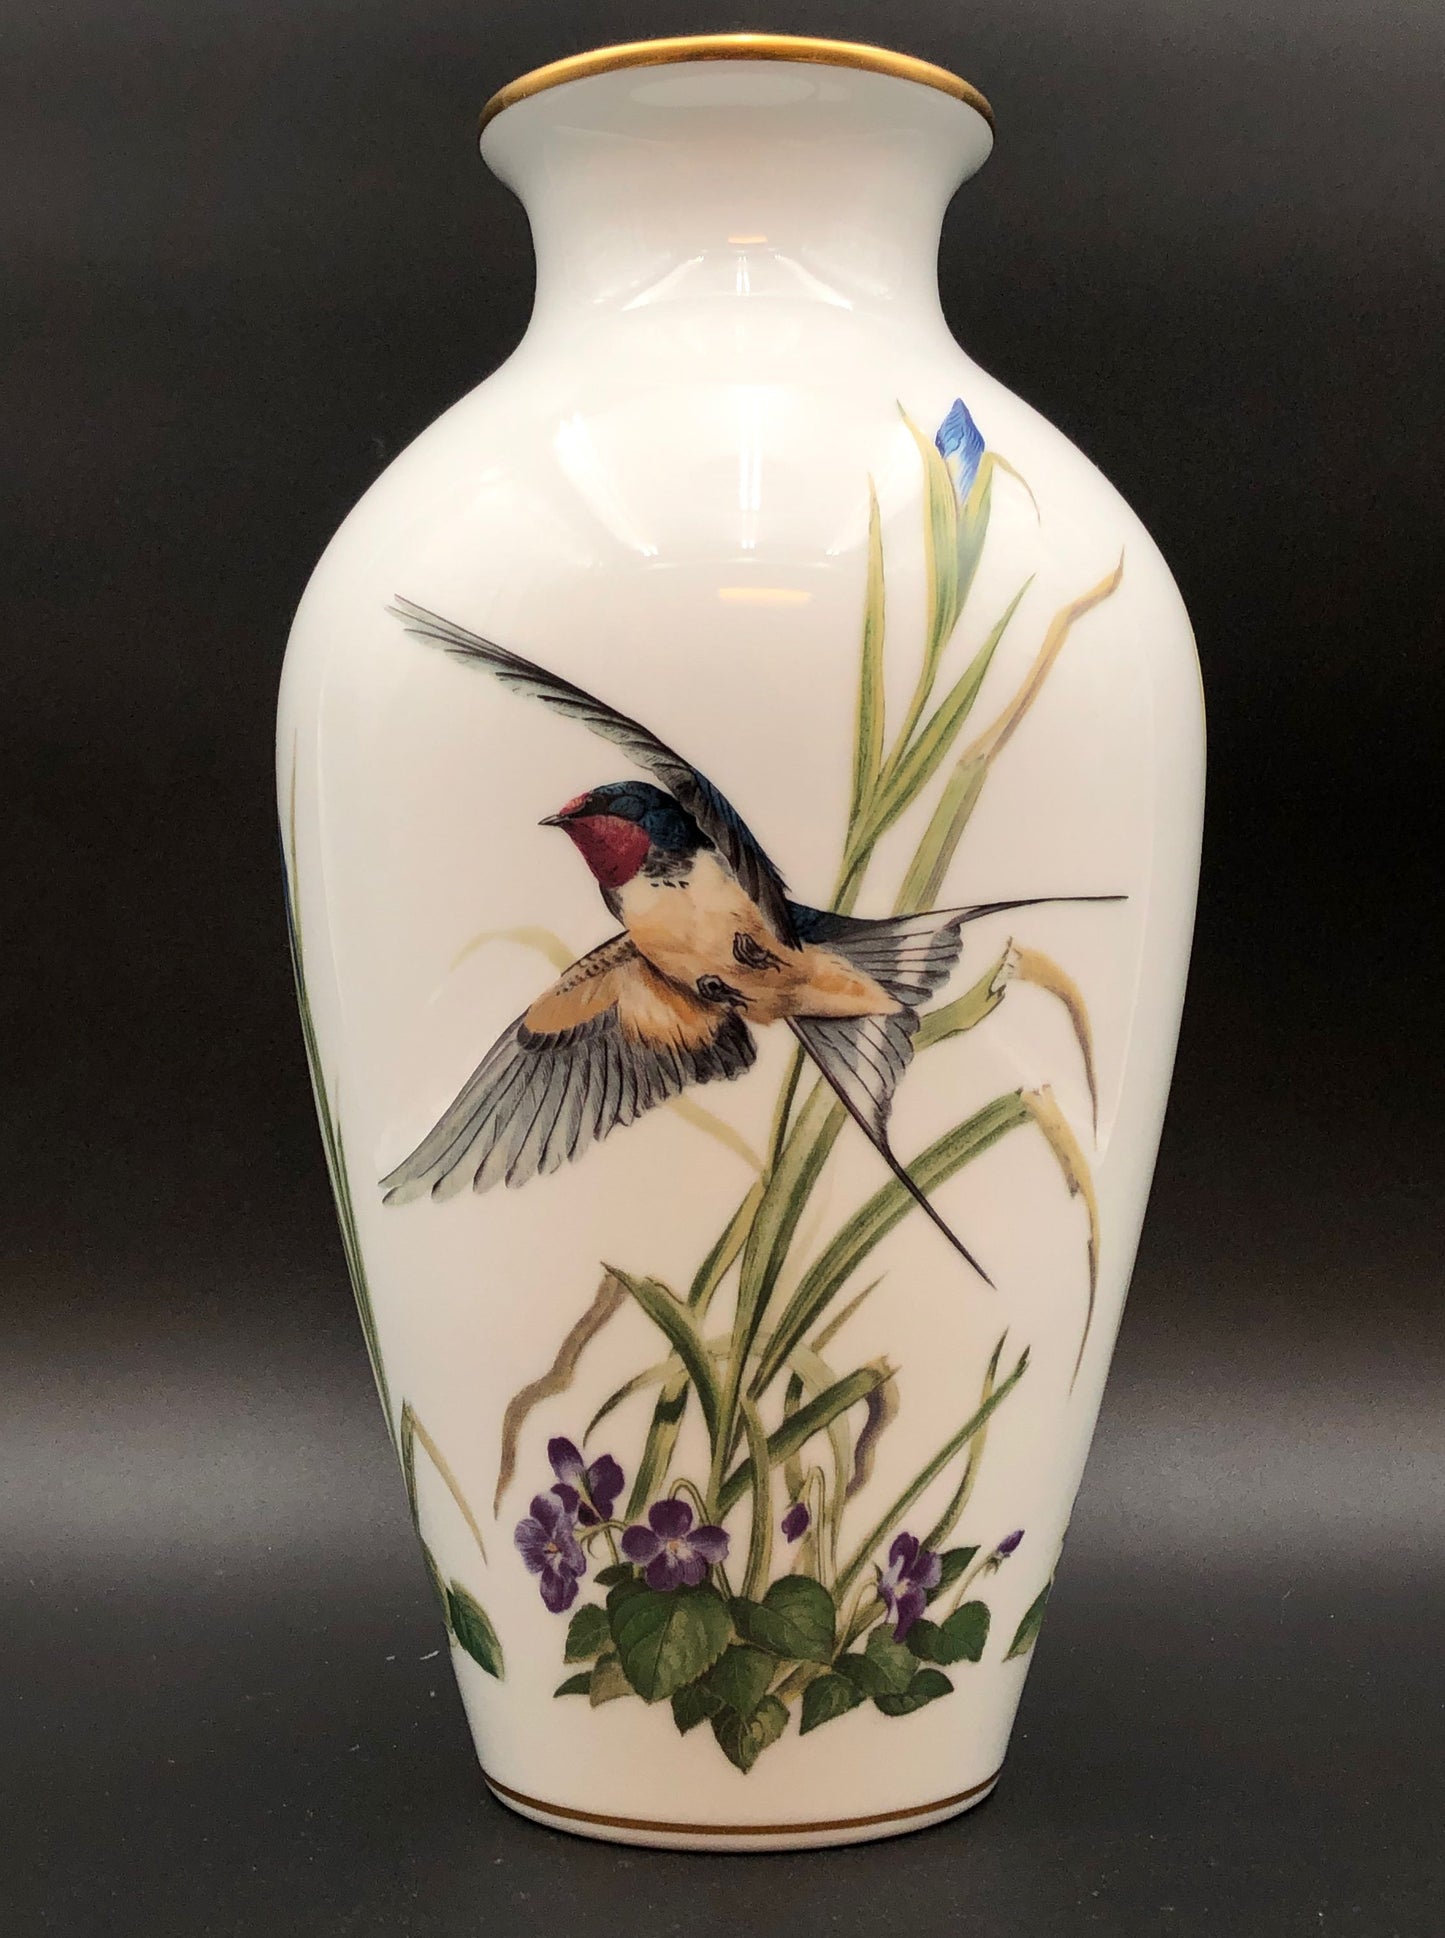 "The Meadowland Bird Vase" By Basil Ede -Franklin Porcelain 1980 Limited Edition